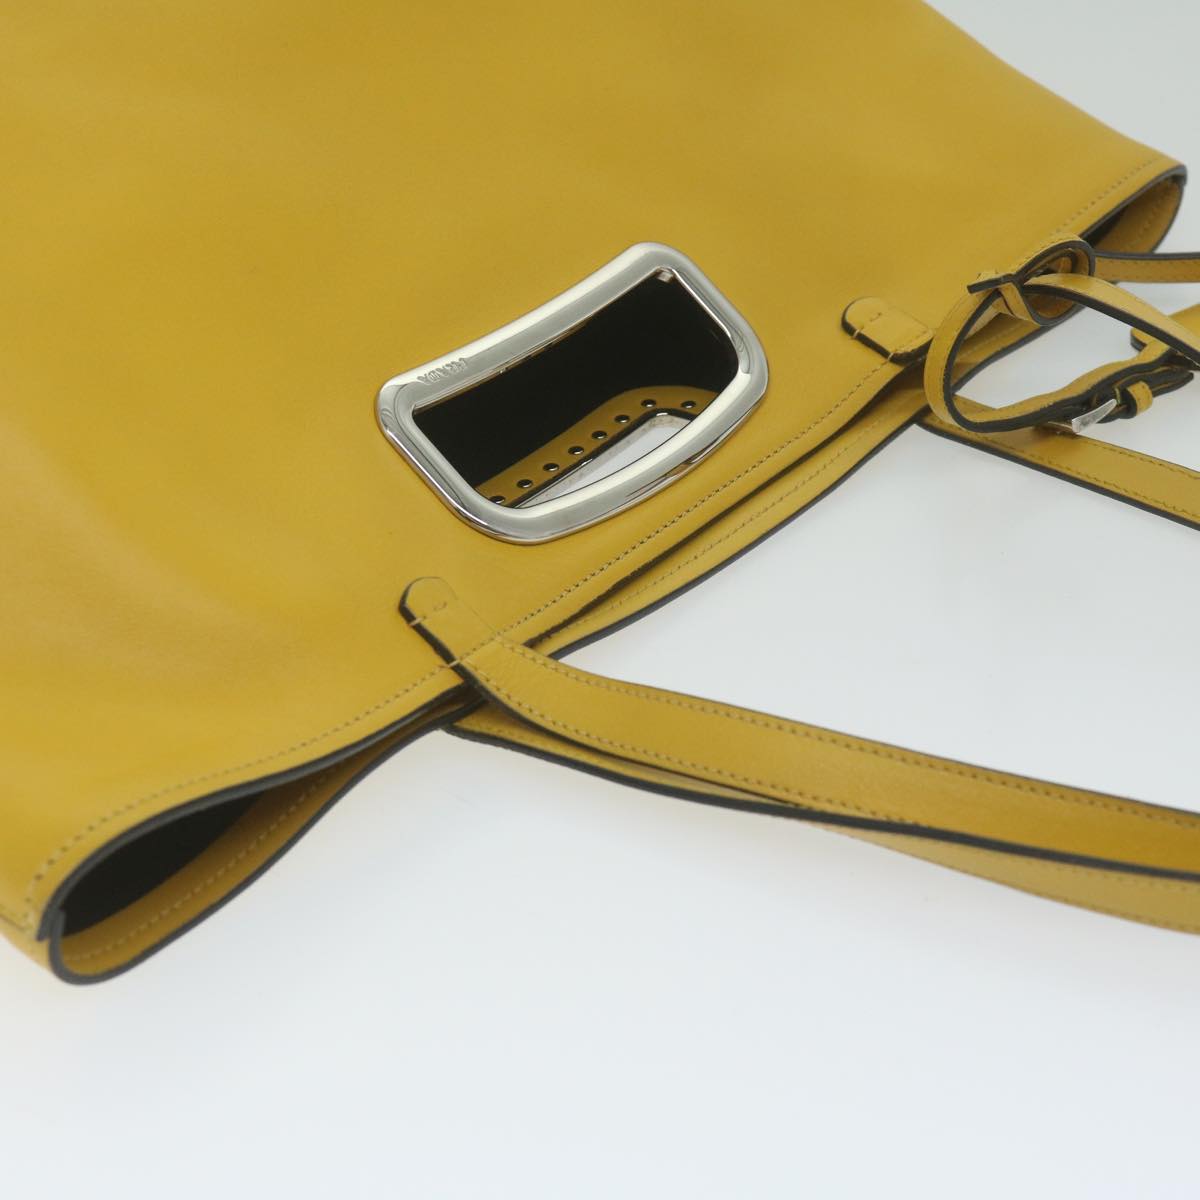 PRADA Tote Bag Leather Yellow Auth 61631